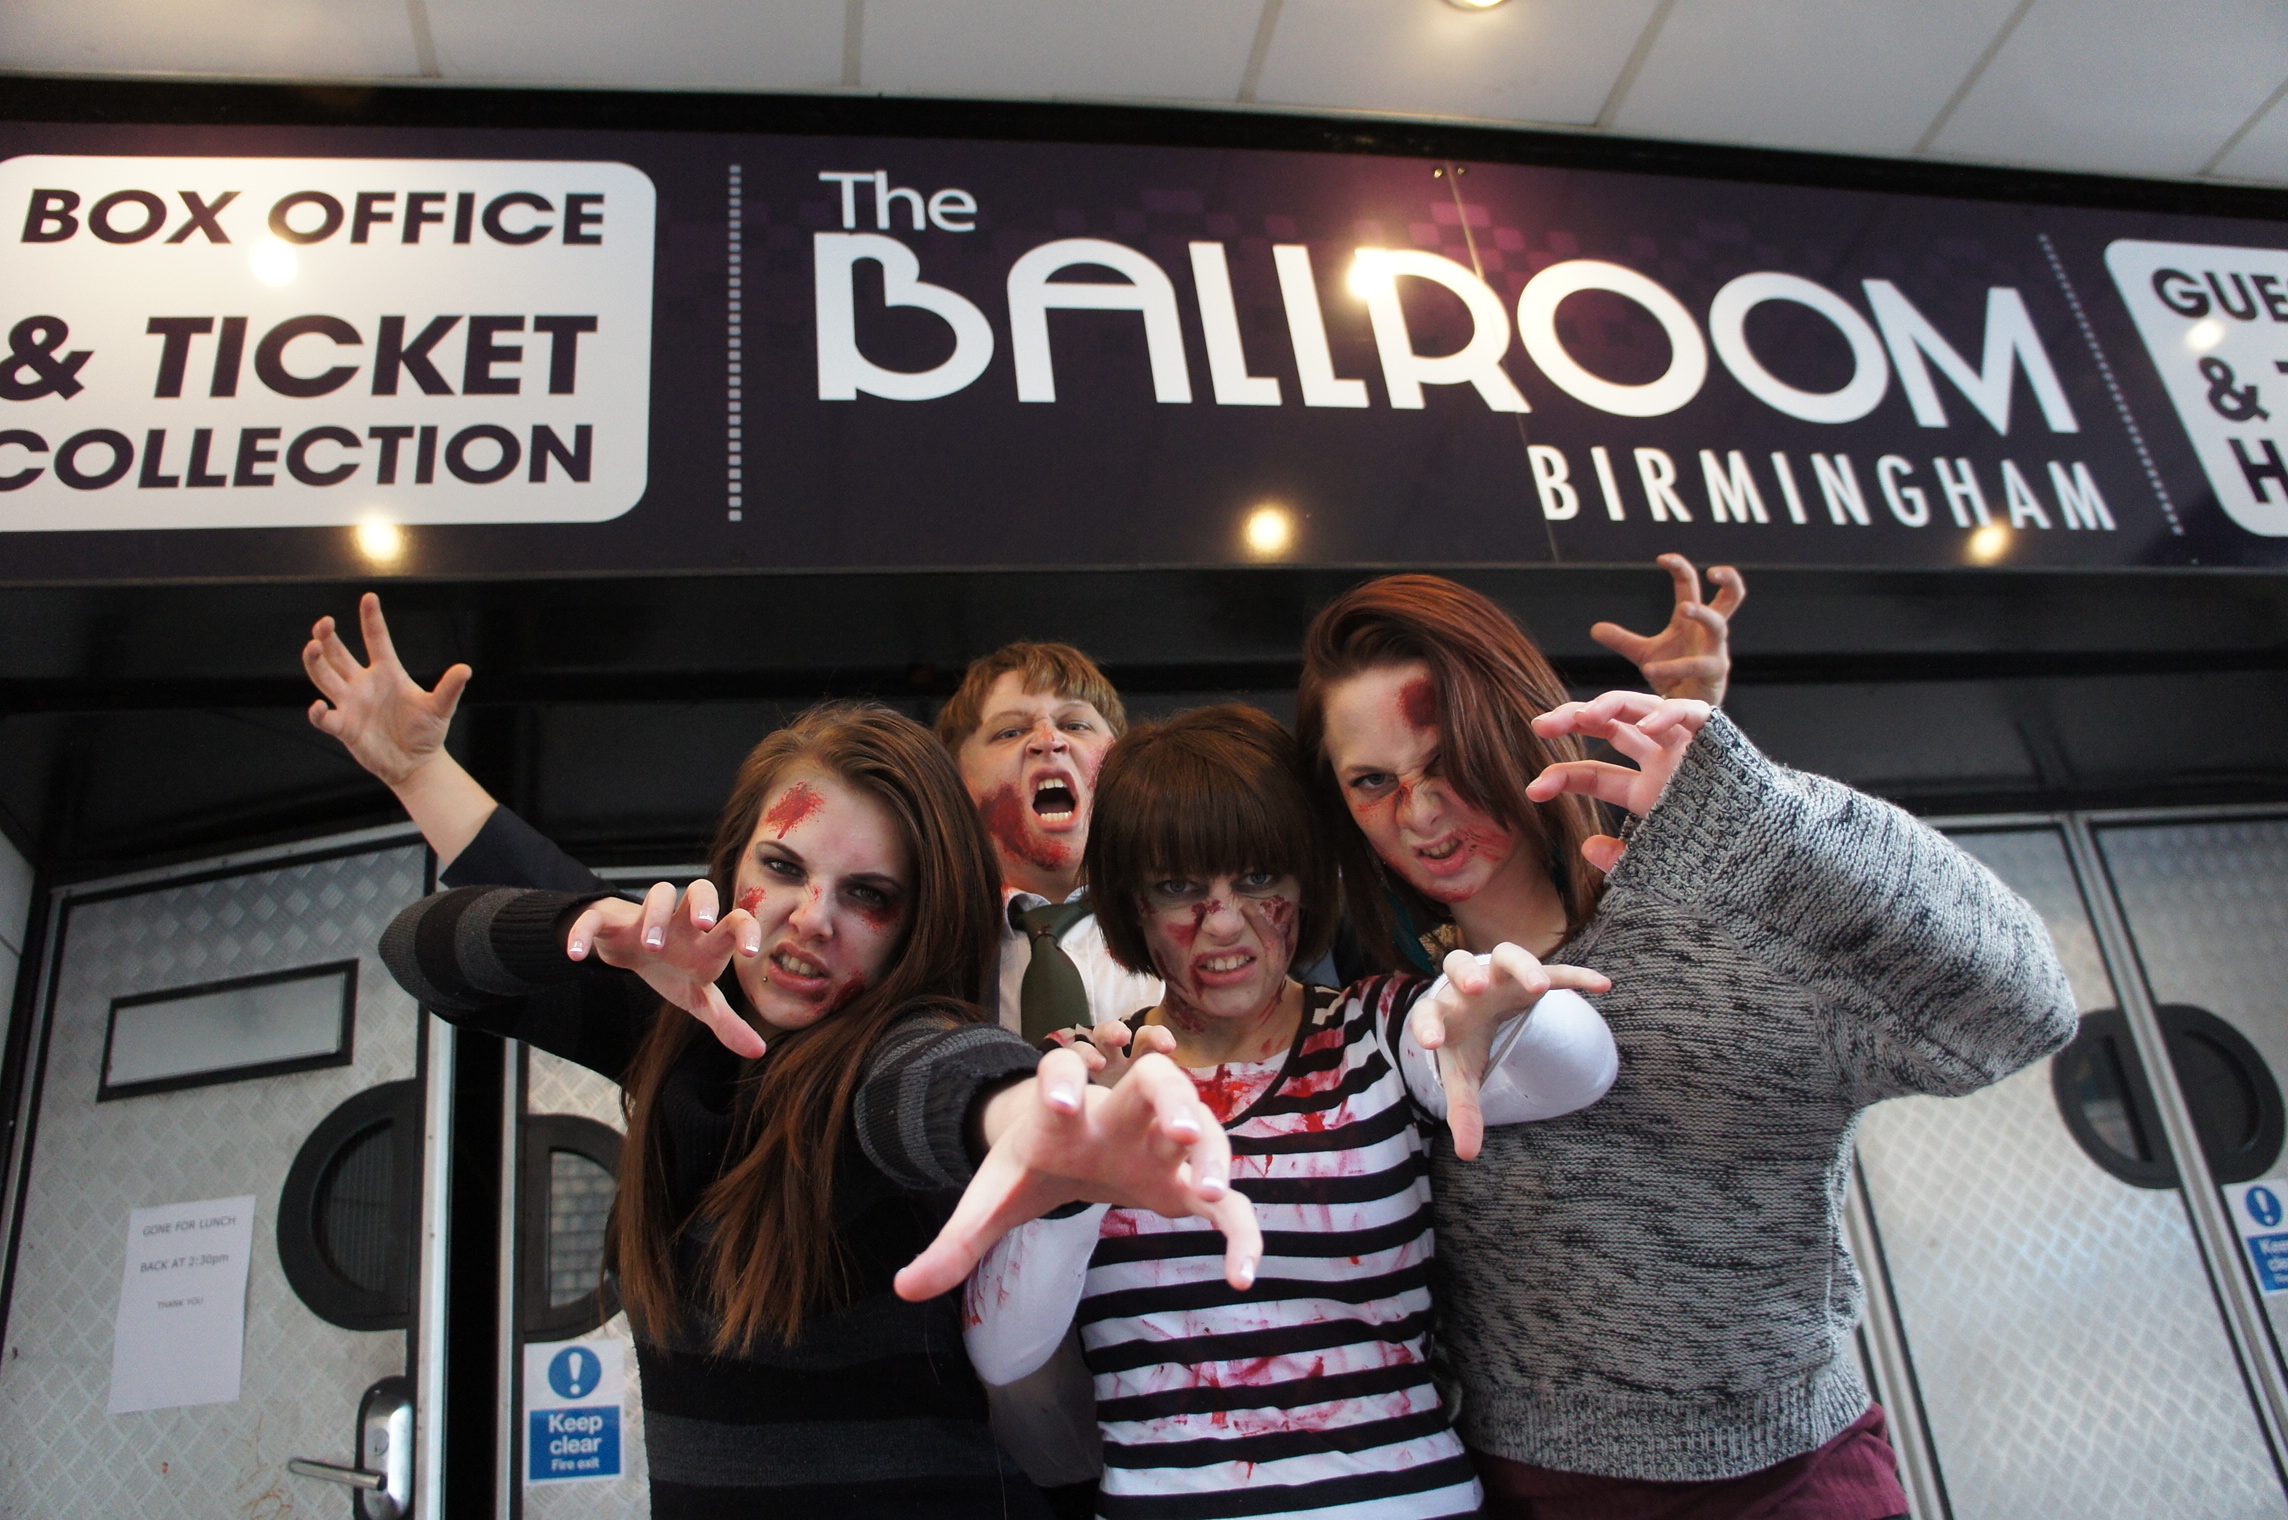 The Zombie Ball 2011 will be held at the Birmingham Ballroom